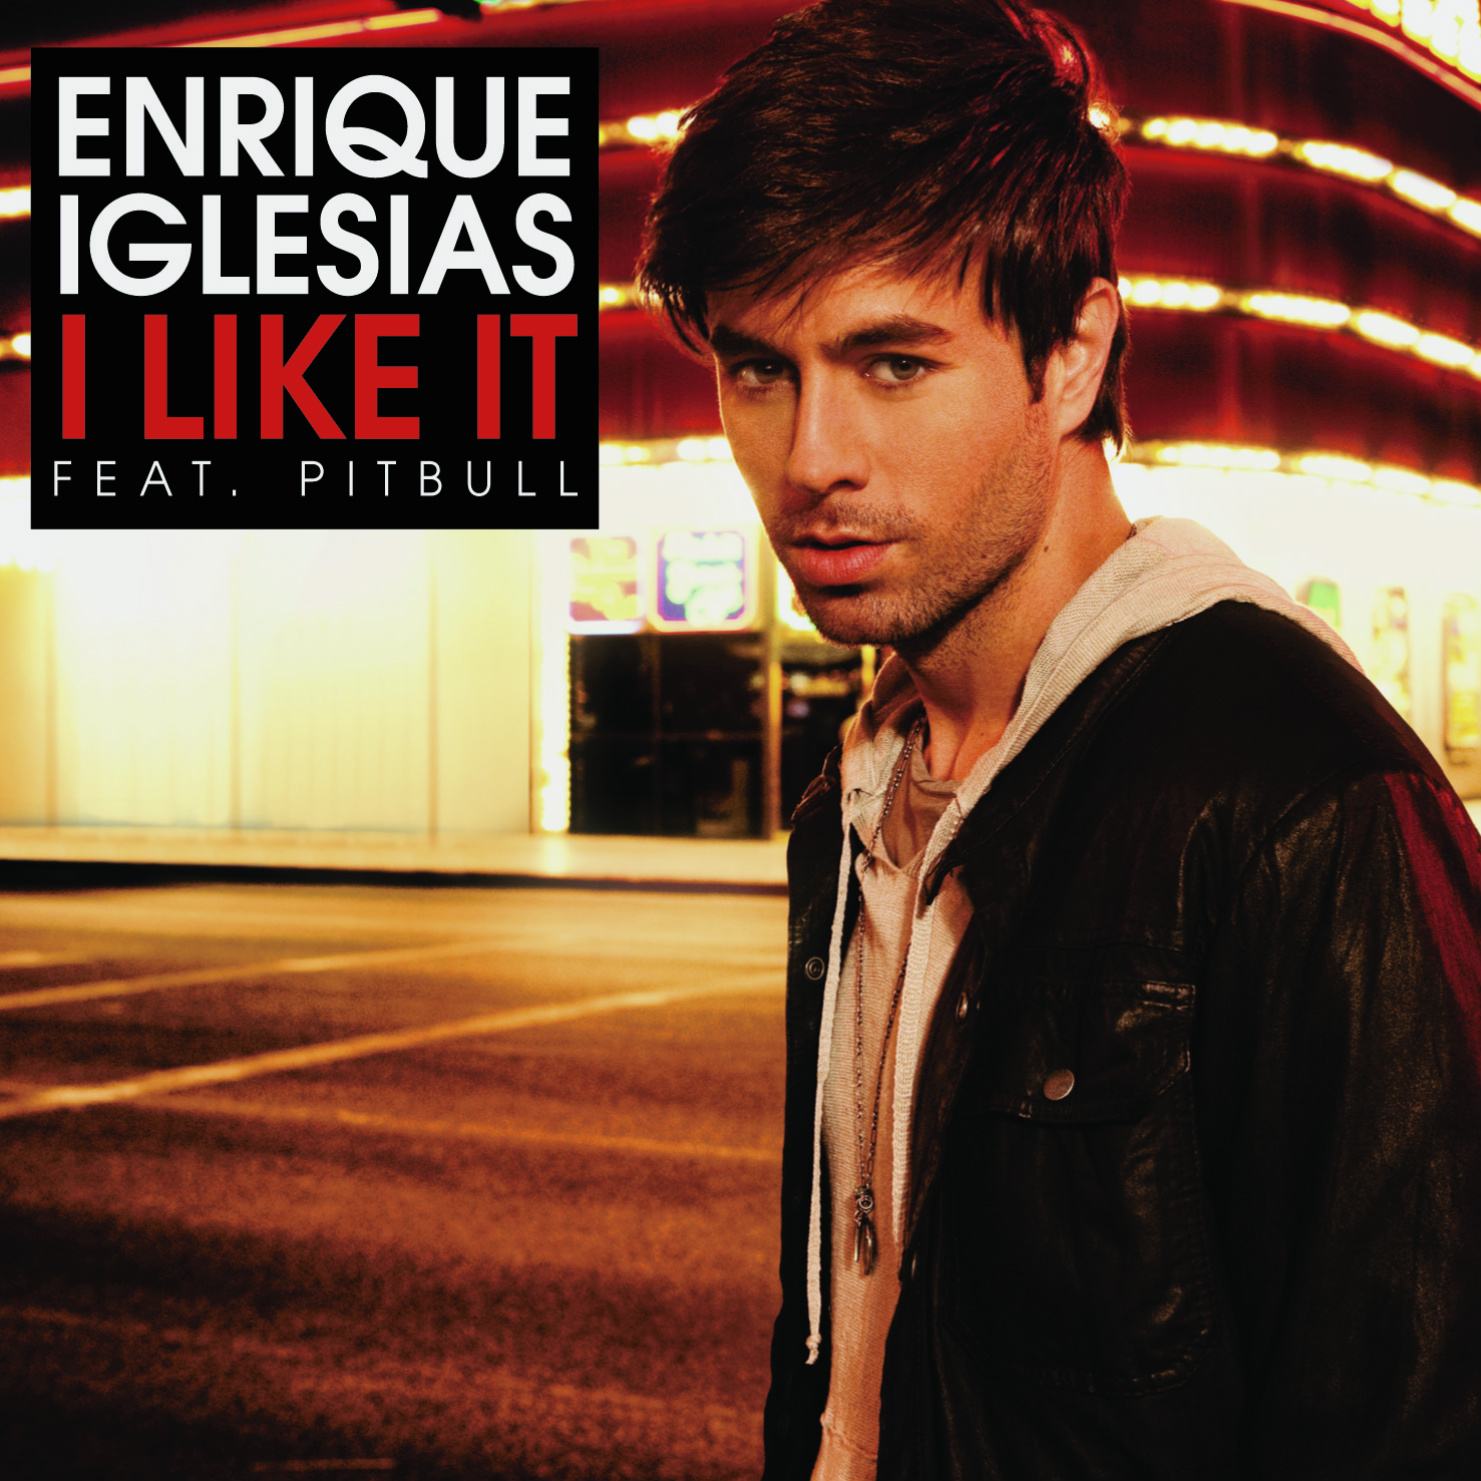 http://3.bp.blogspot.com/_mupIVJbjvuU/TBz3AK0IamI/AAAAAAAADm0/RiLk2VqPdhA/s1600/Enrique+Iglesias+-+I+Like+It+%20(Official+Single+Cover).jpg